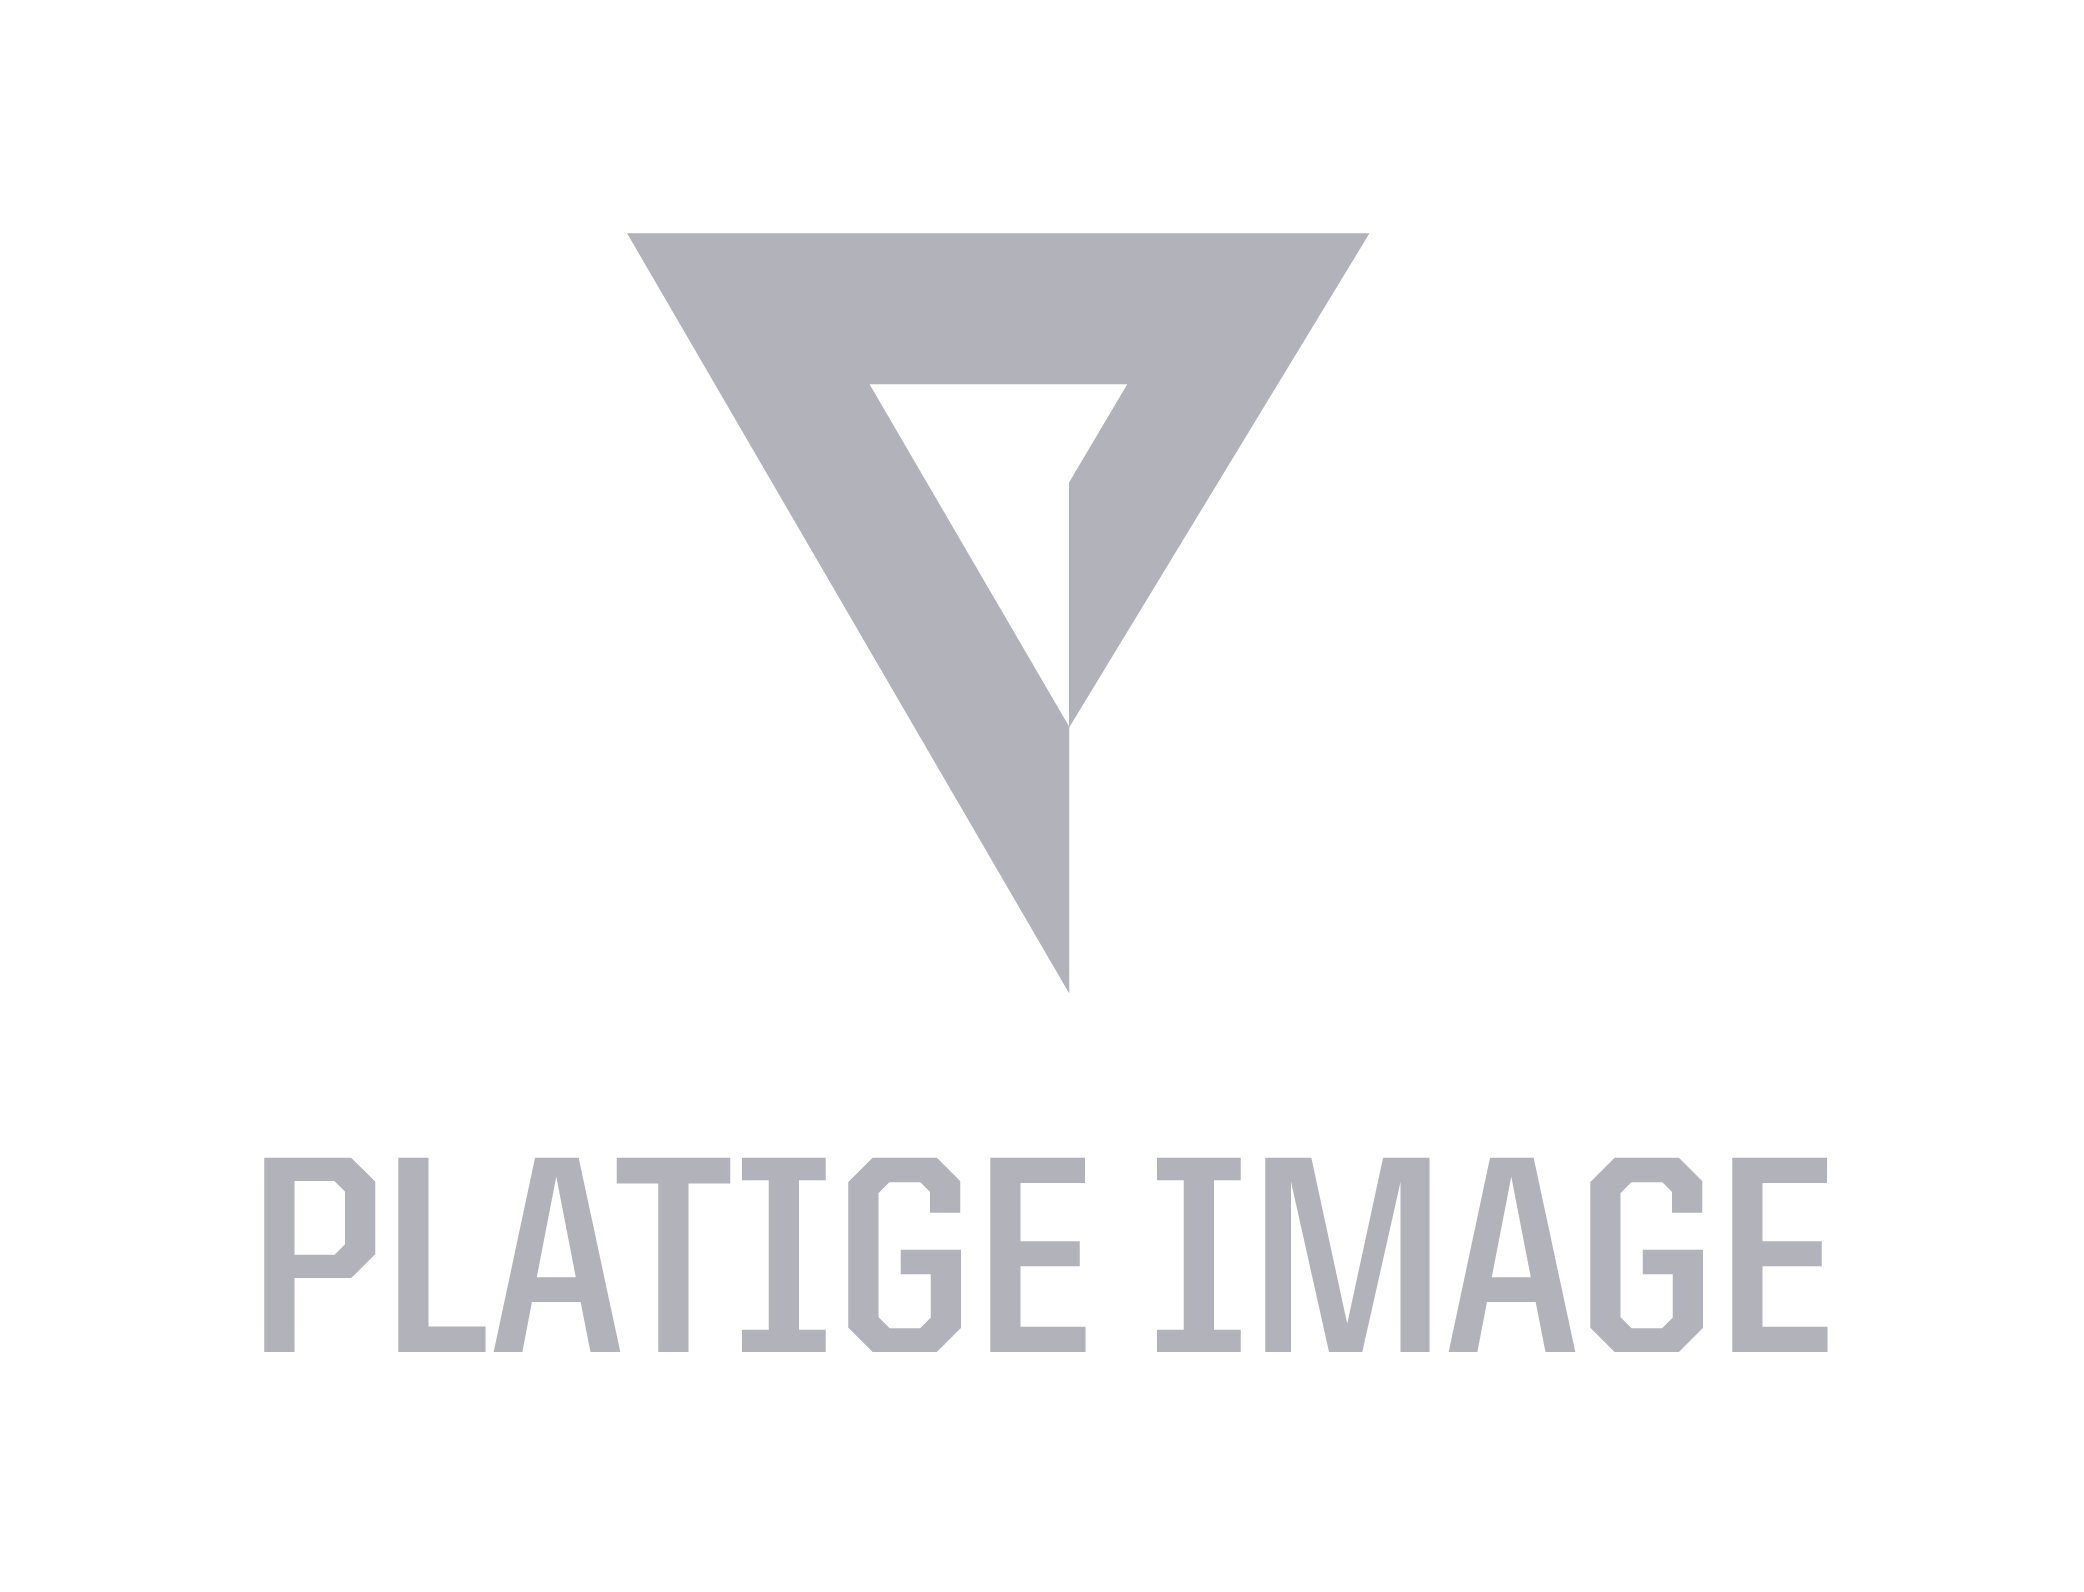 Platige Image GameDev logo - trusted partners of 8Bit gaming industry recruitment